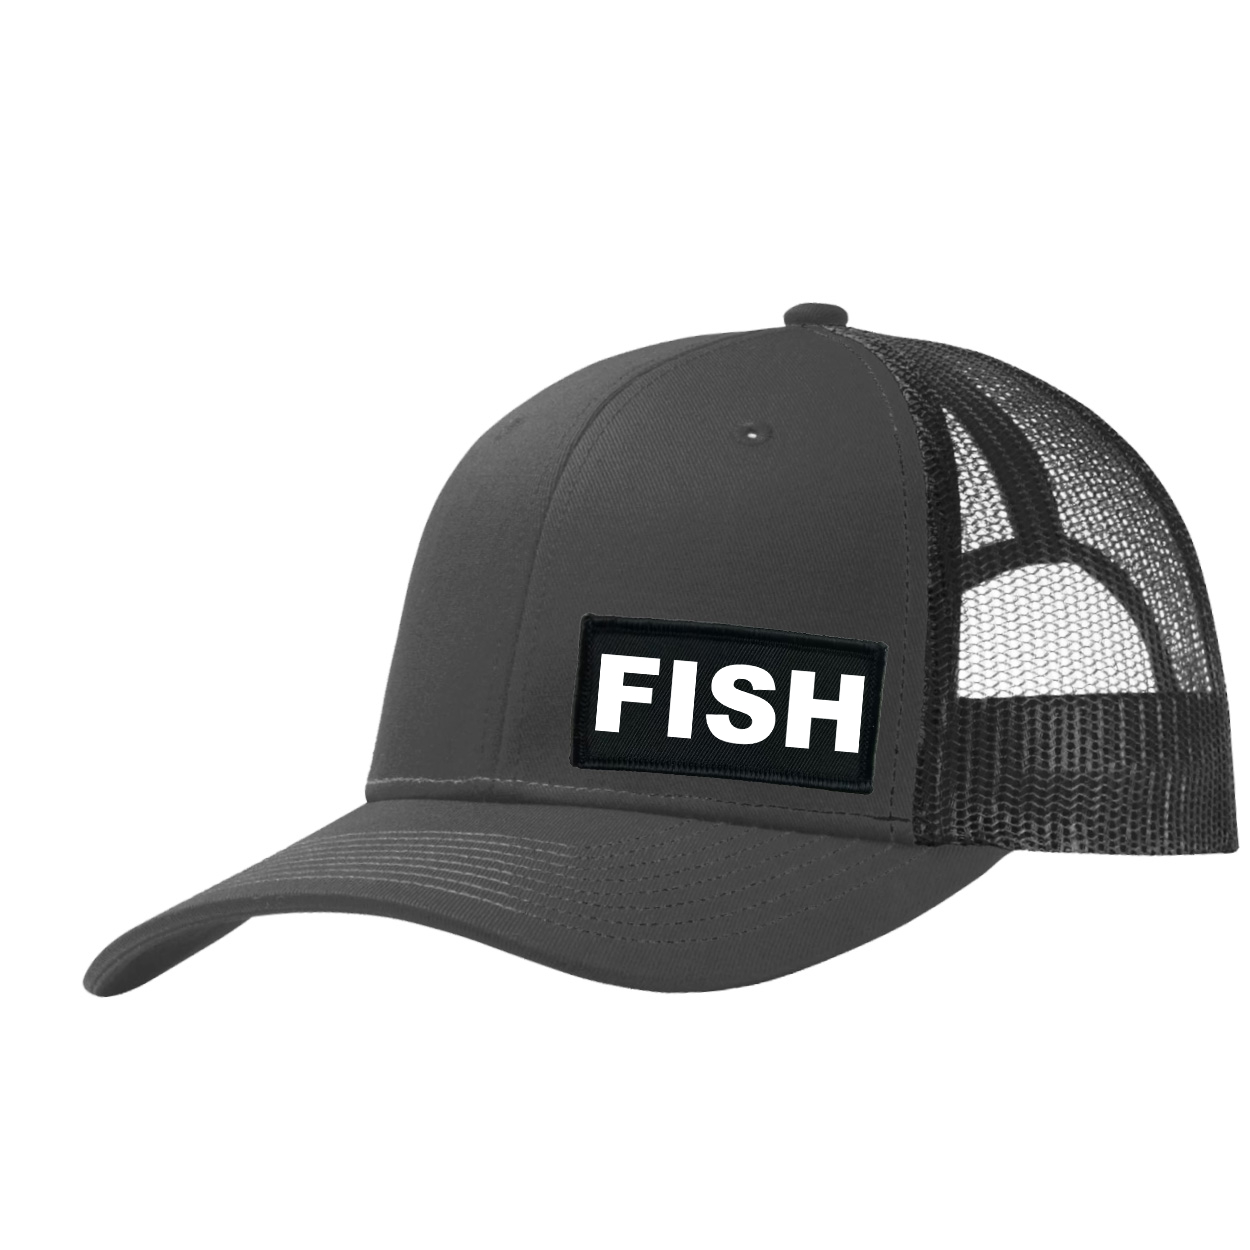 Fish Brand Logo Night Out Woven Patch Snapback Trucker Hat Dark Gray/Black (White Logo)